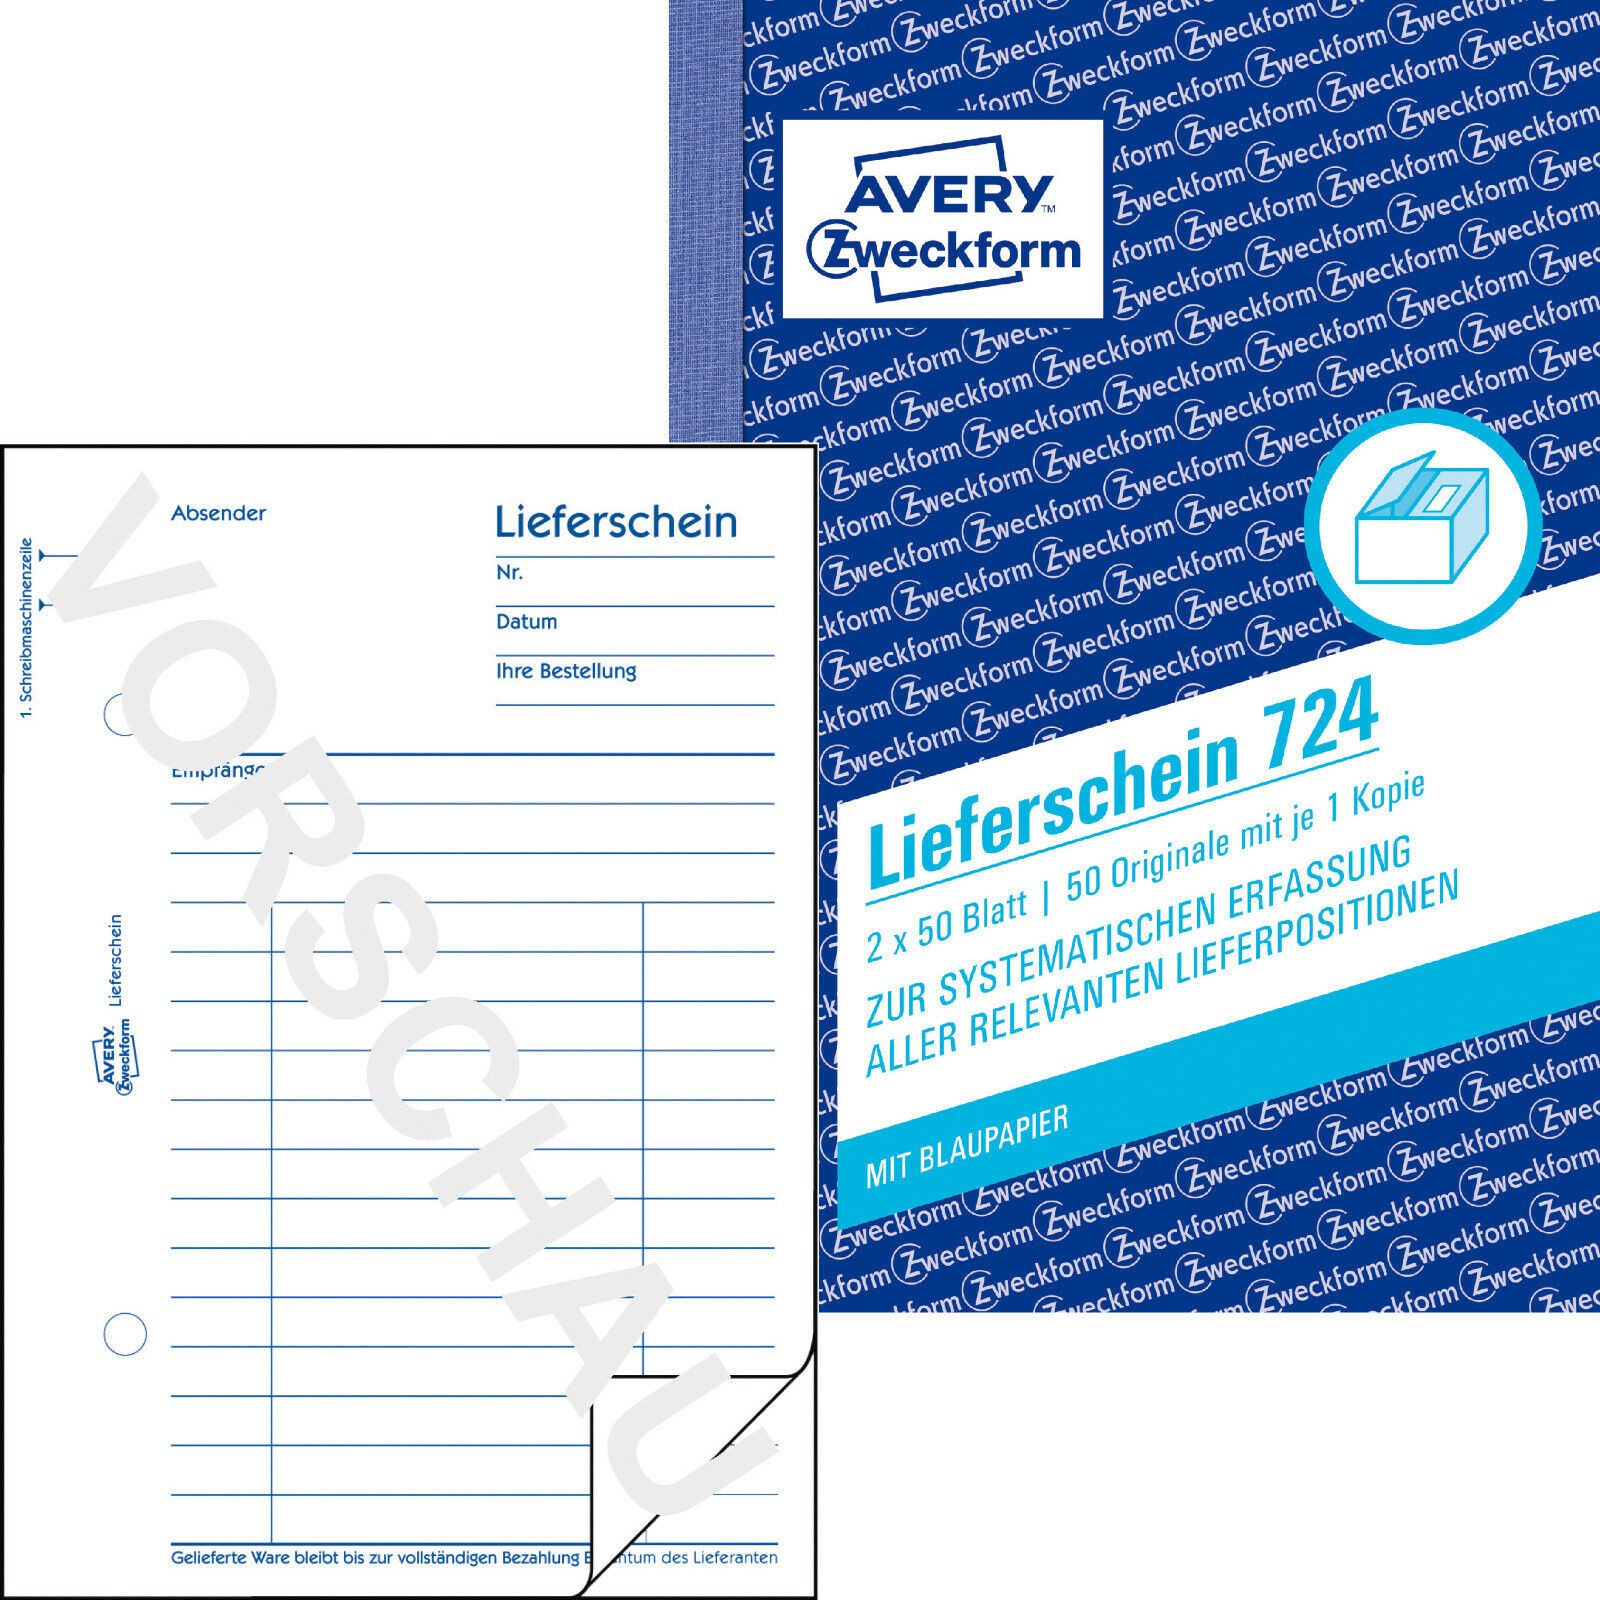 Avery Zweckform Formularblock Avery Zweckform Lieferschein 724 A6 2x50Blatt mit Blaupapier Formular